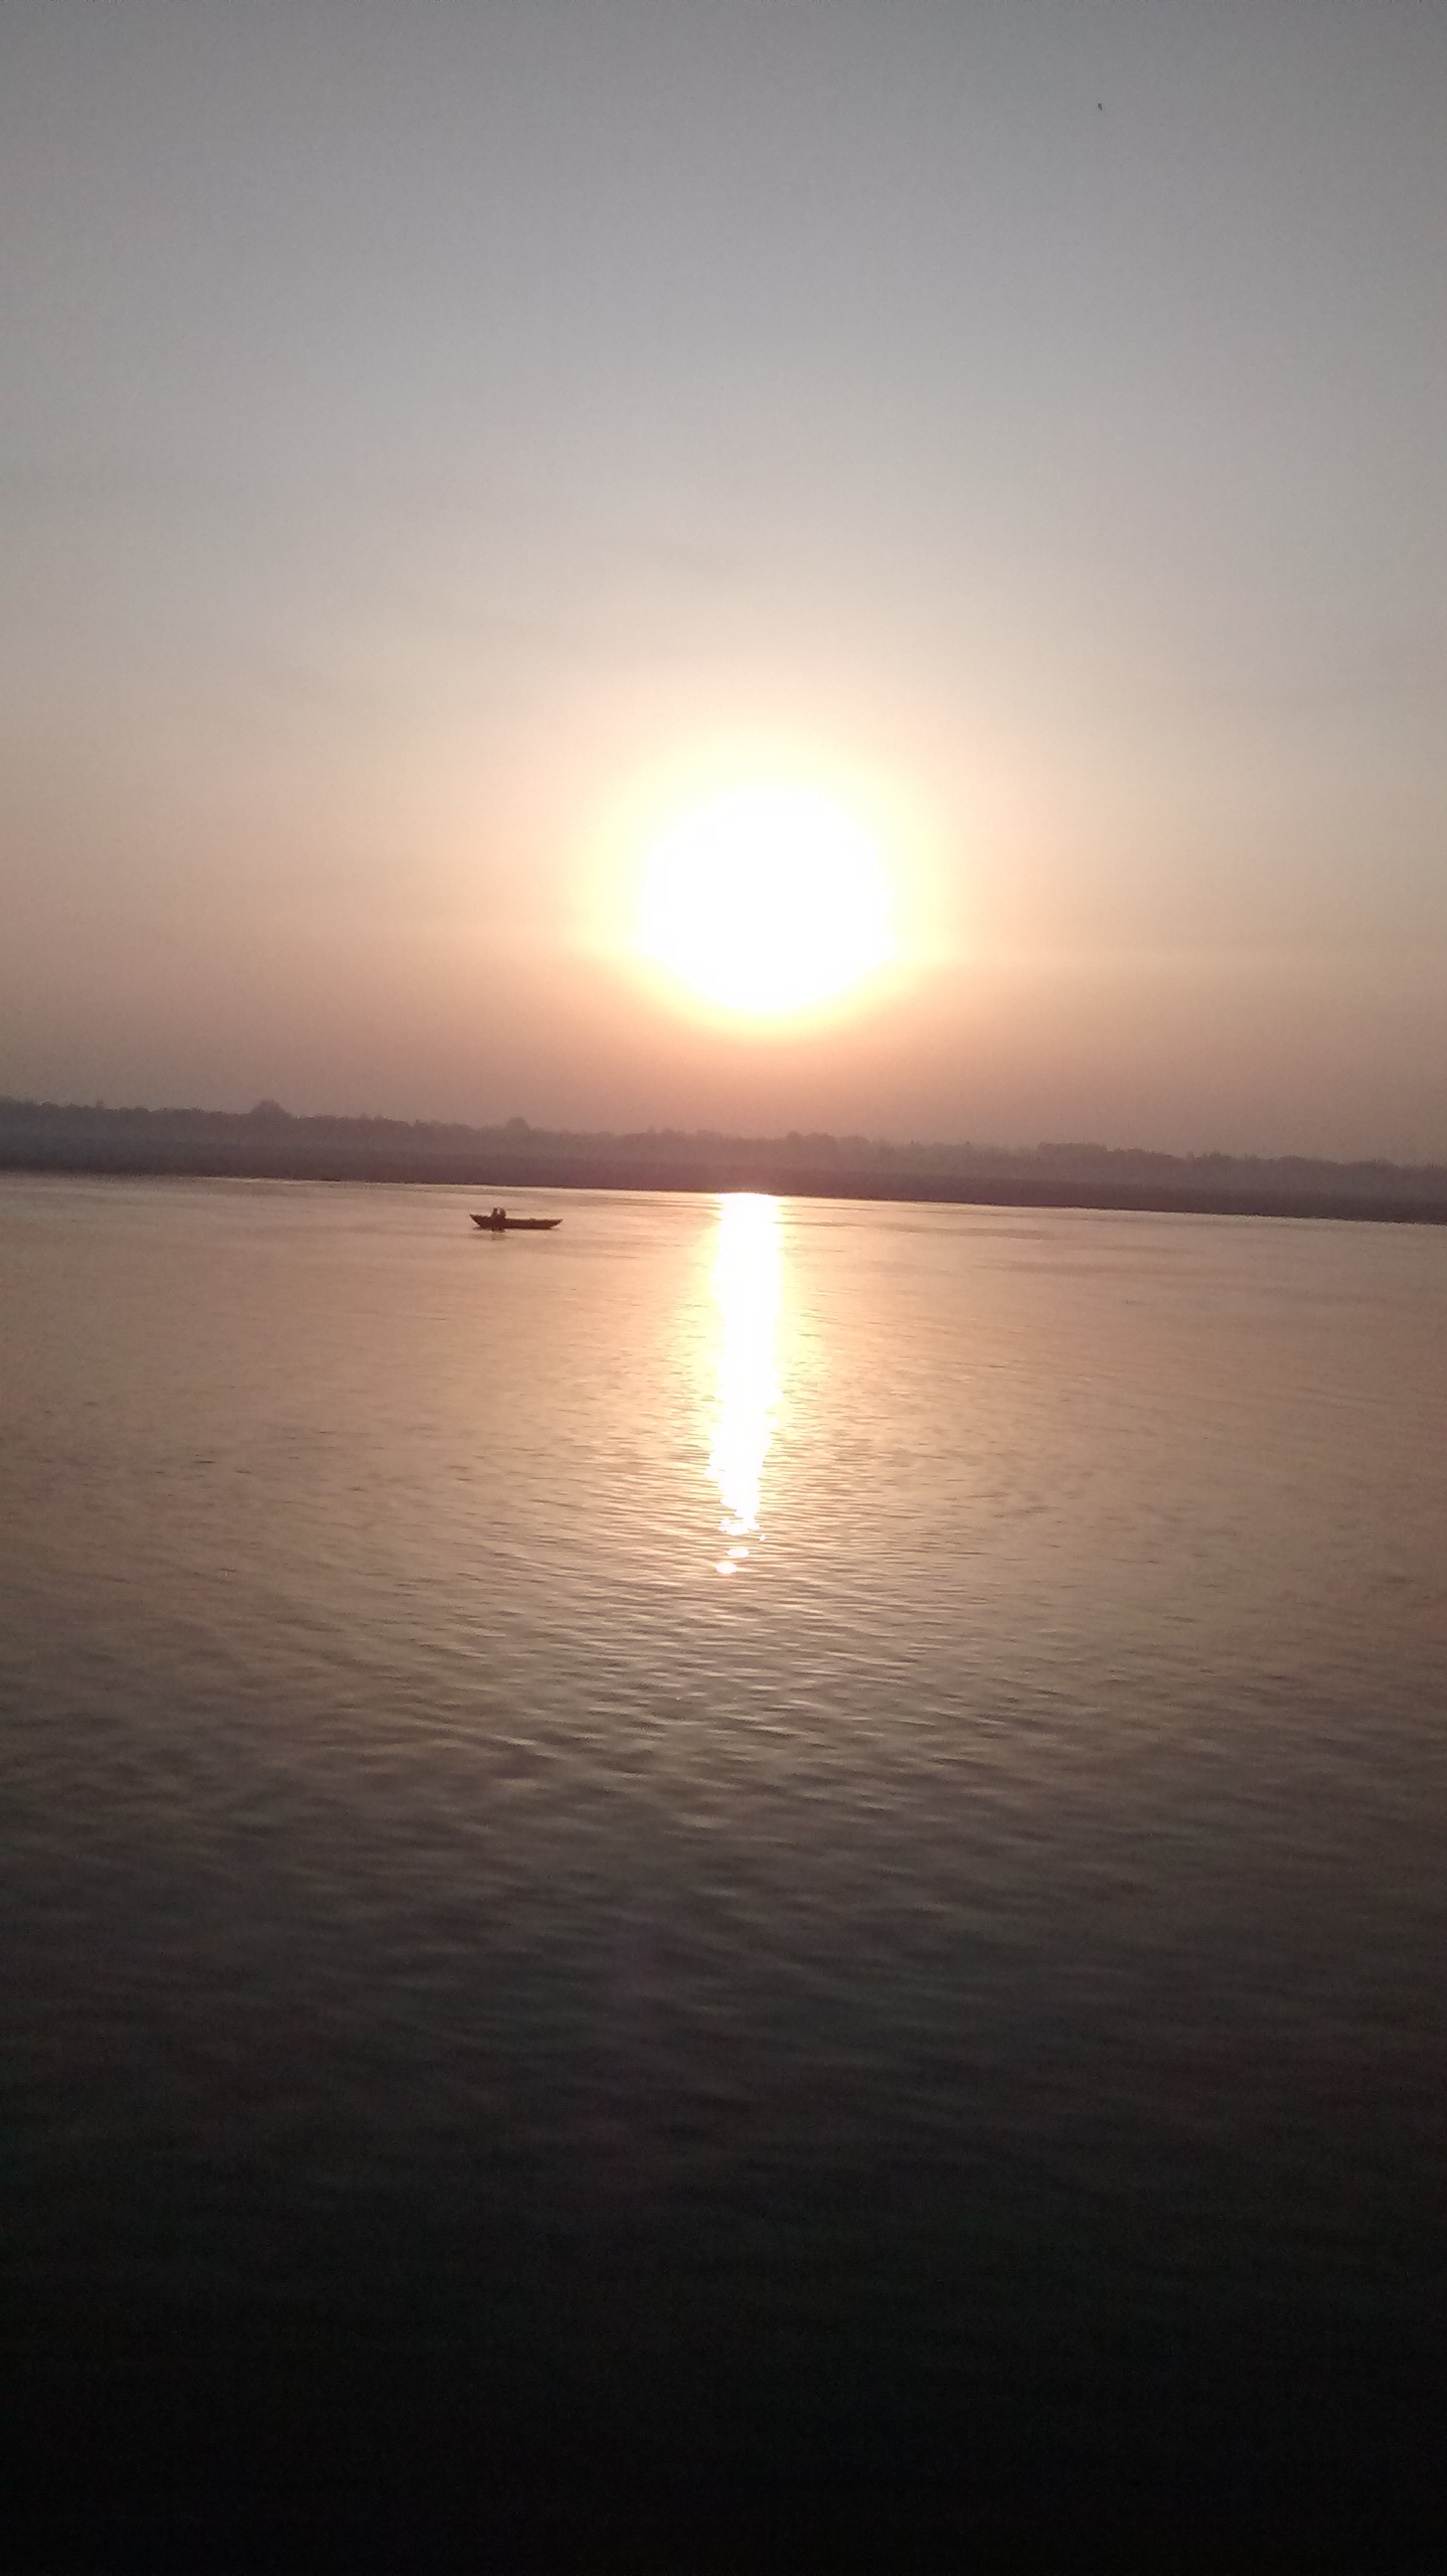 Longest River of India